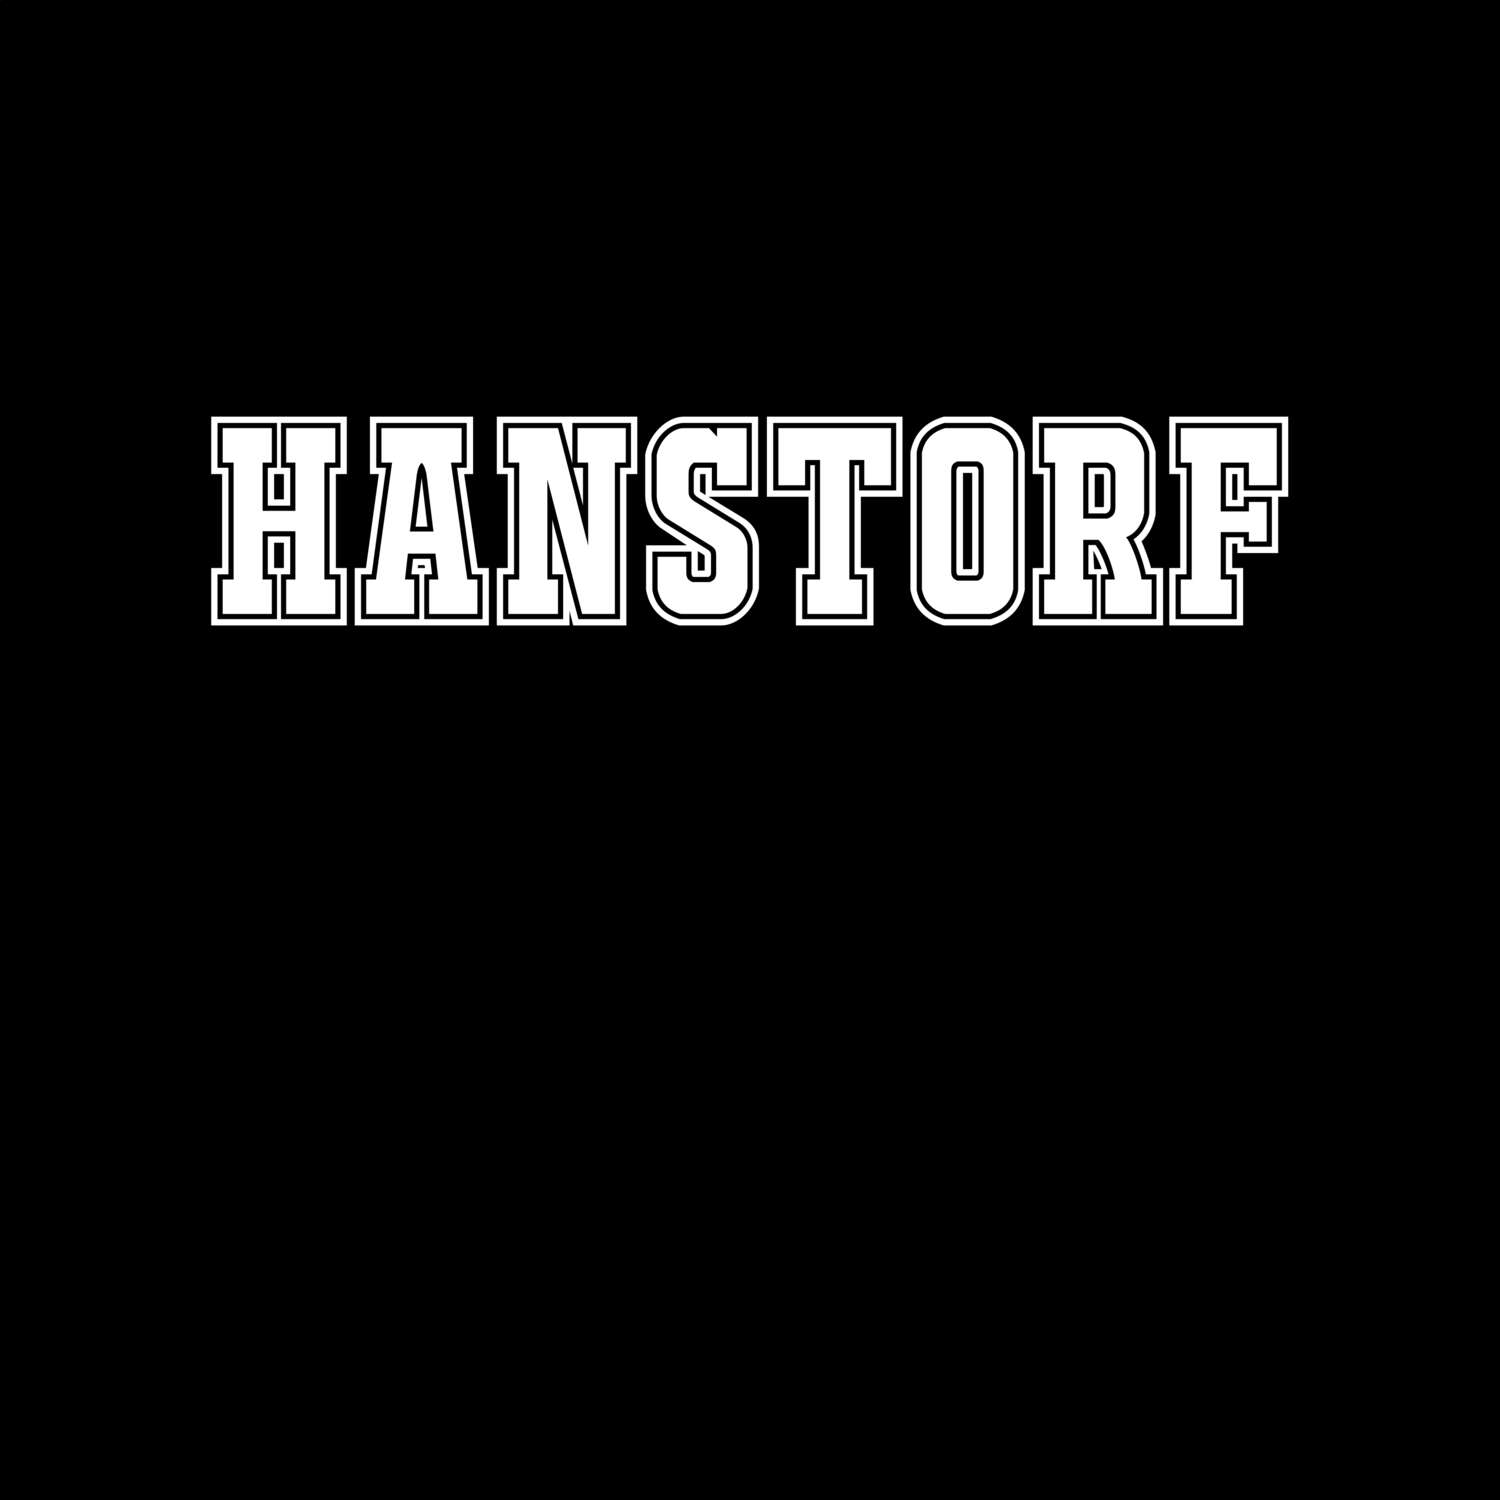 Hanstorf T-Shirt »Classic«